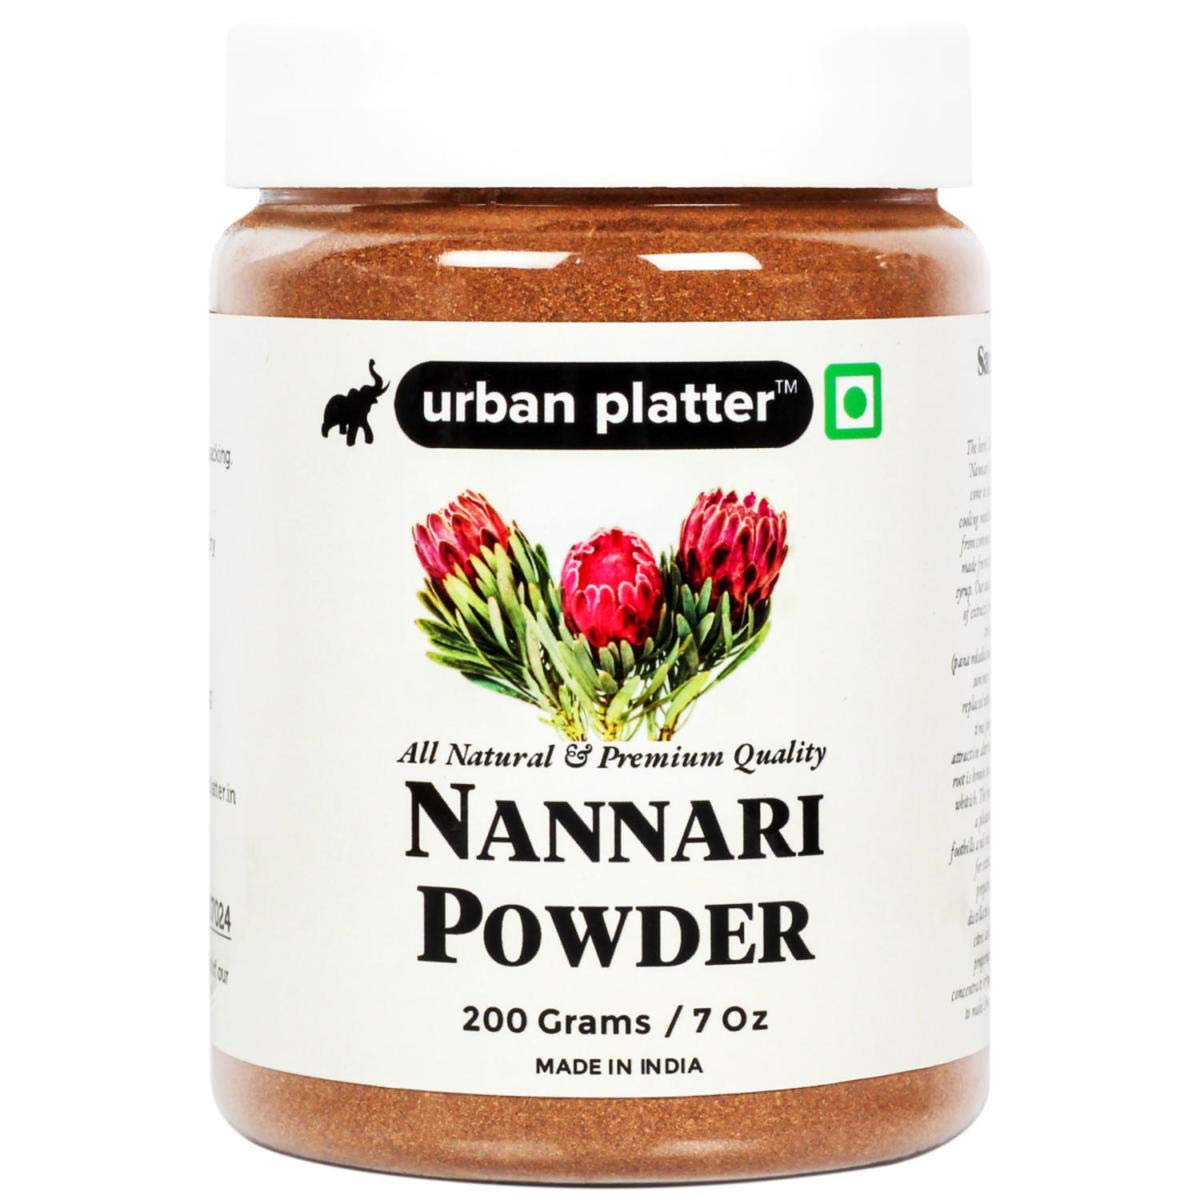 Urban Platter Nannari Powder Image